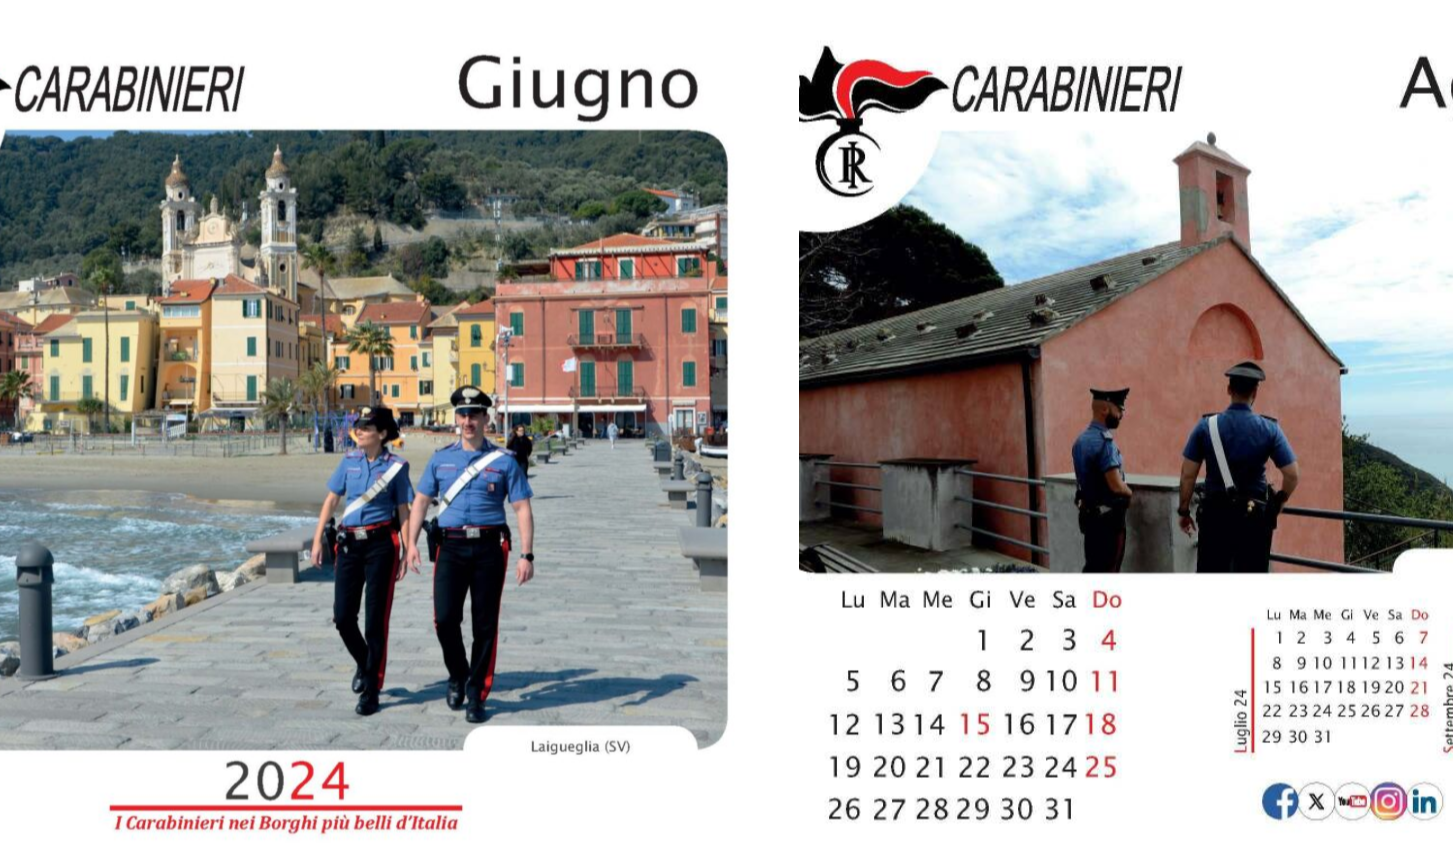 Carabinieri, Framura e Laigueglia nel calendario dell'Arma 2024